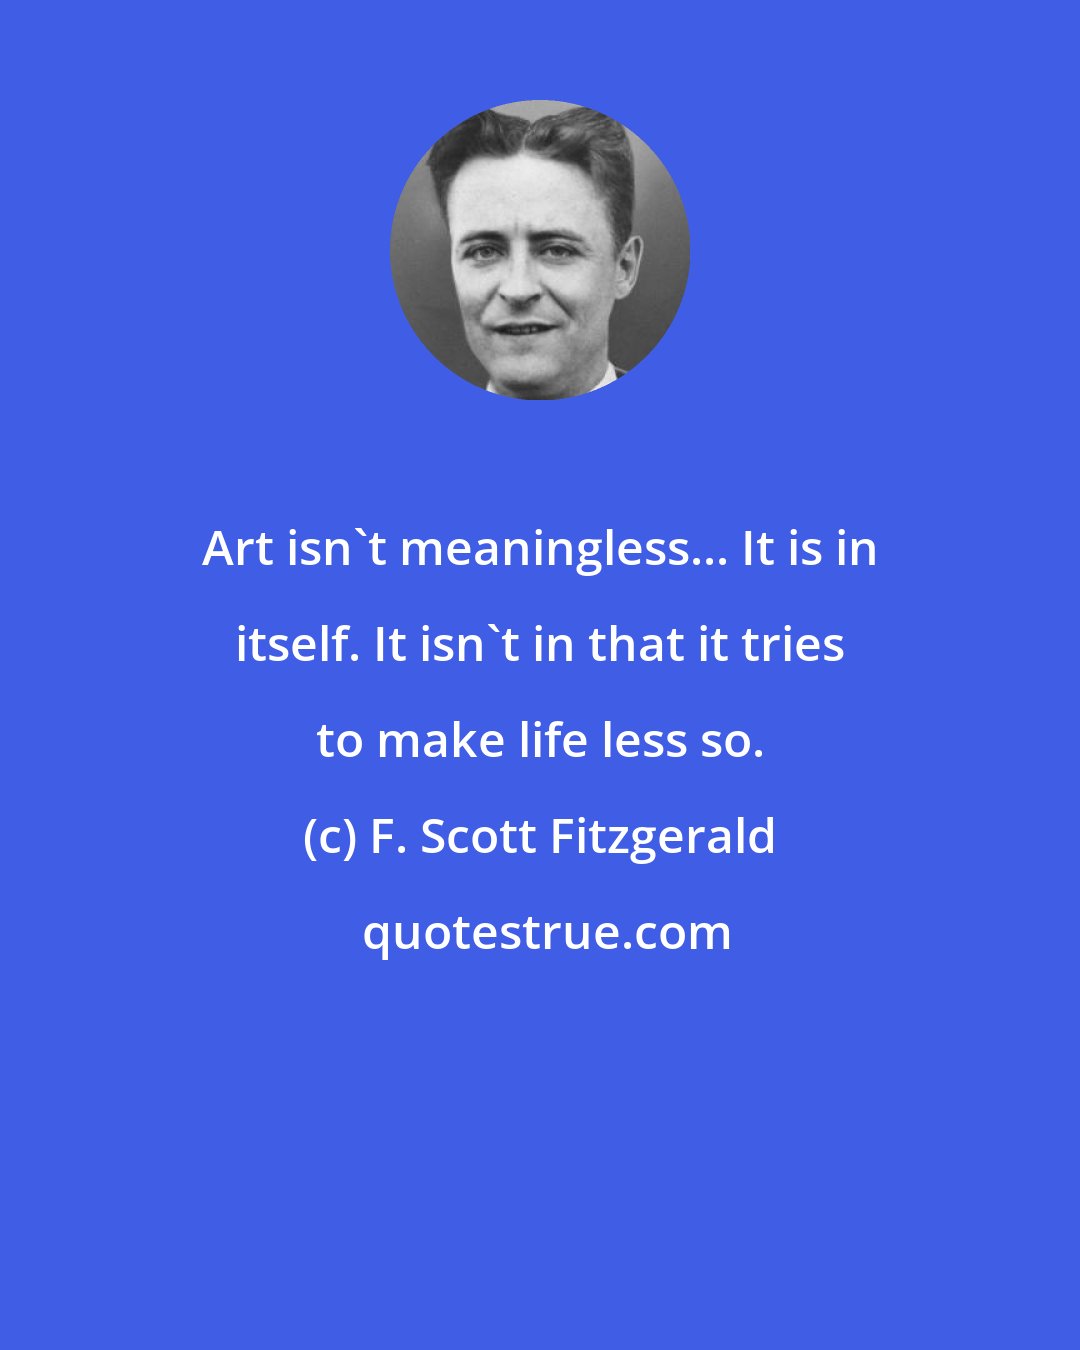 F. Scott Fitzgerald: Art isn't meaningless... It is in itself. It isn't in that it tries to make life less so.